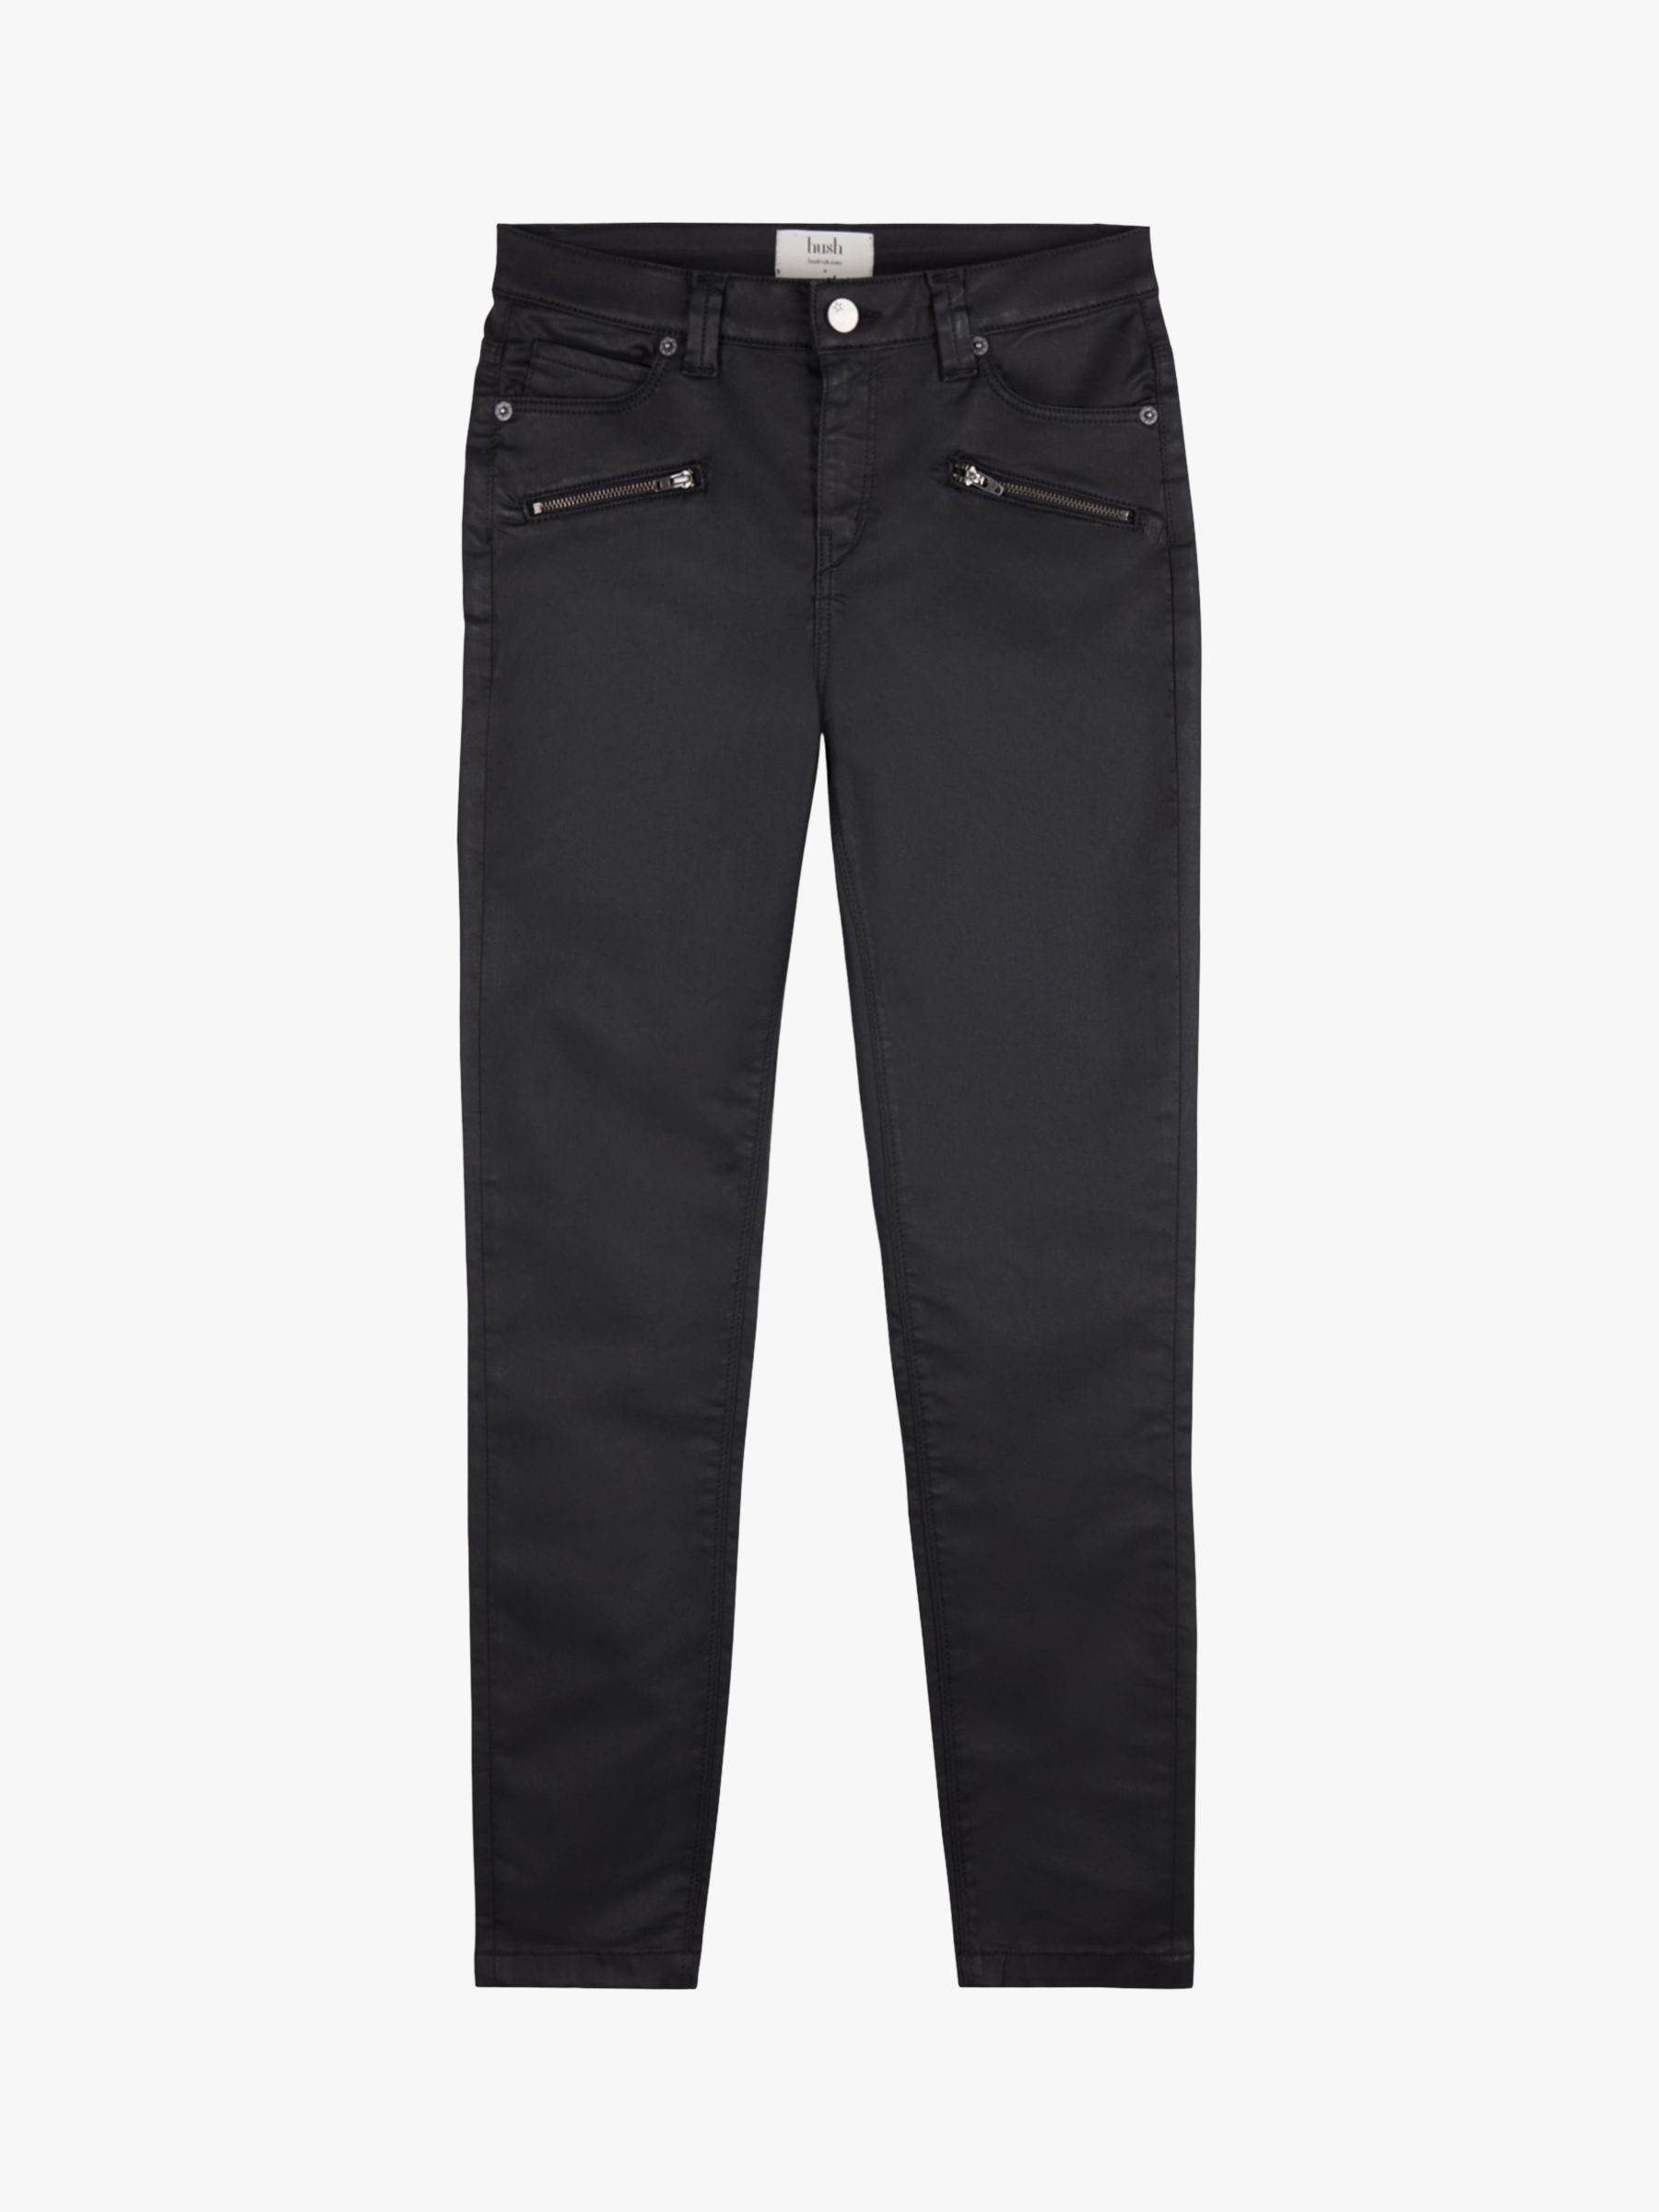 hush Coated Skinny Jeans, Black at John Lewis & Partners